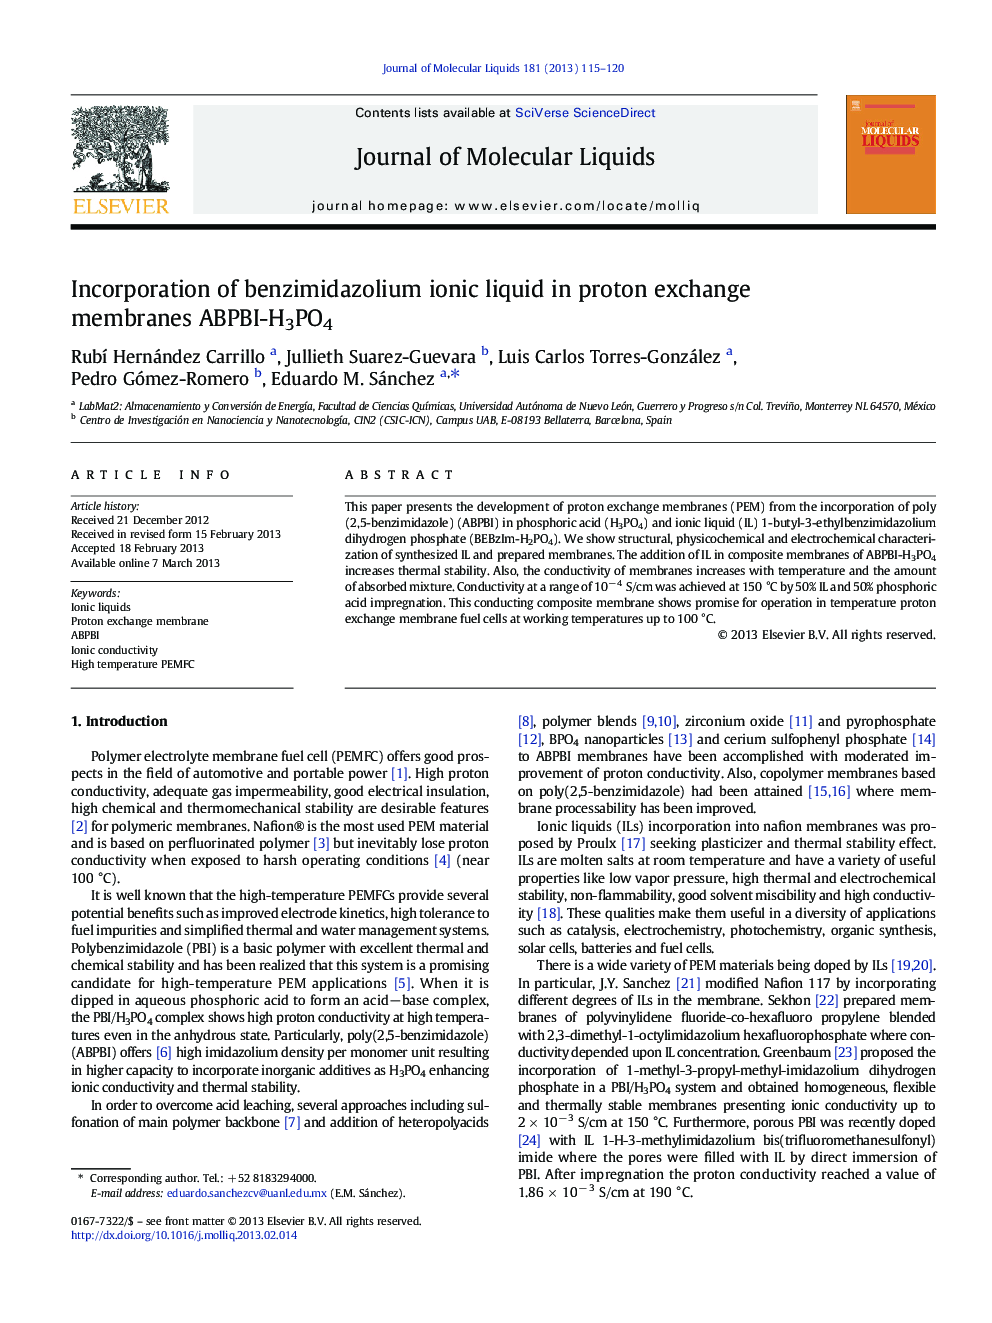 Incorporation of benzimidazolium ionic liquid in proton exchange membranes ABPBI-H3PO4